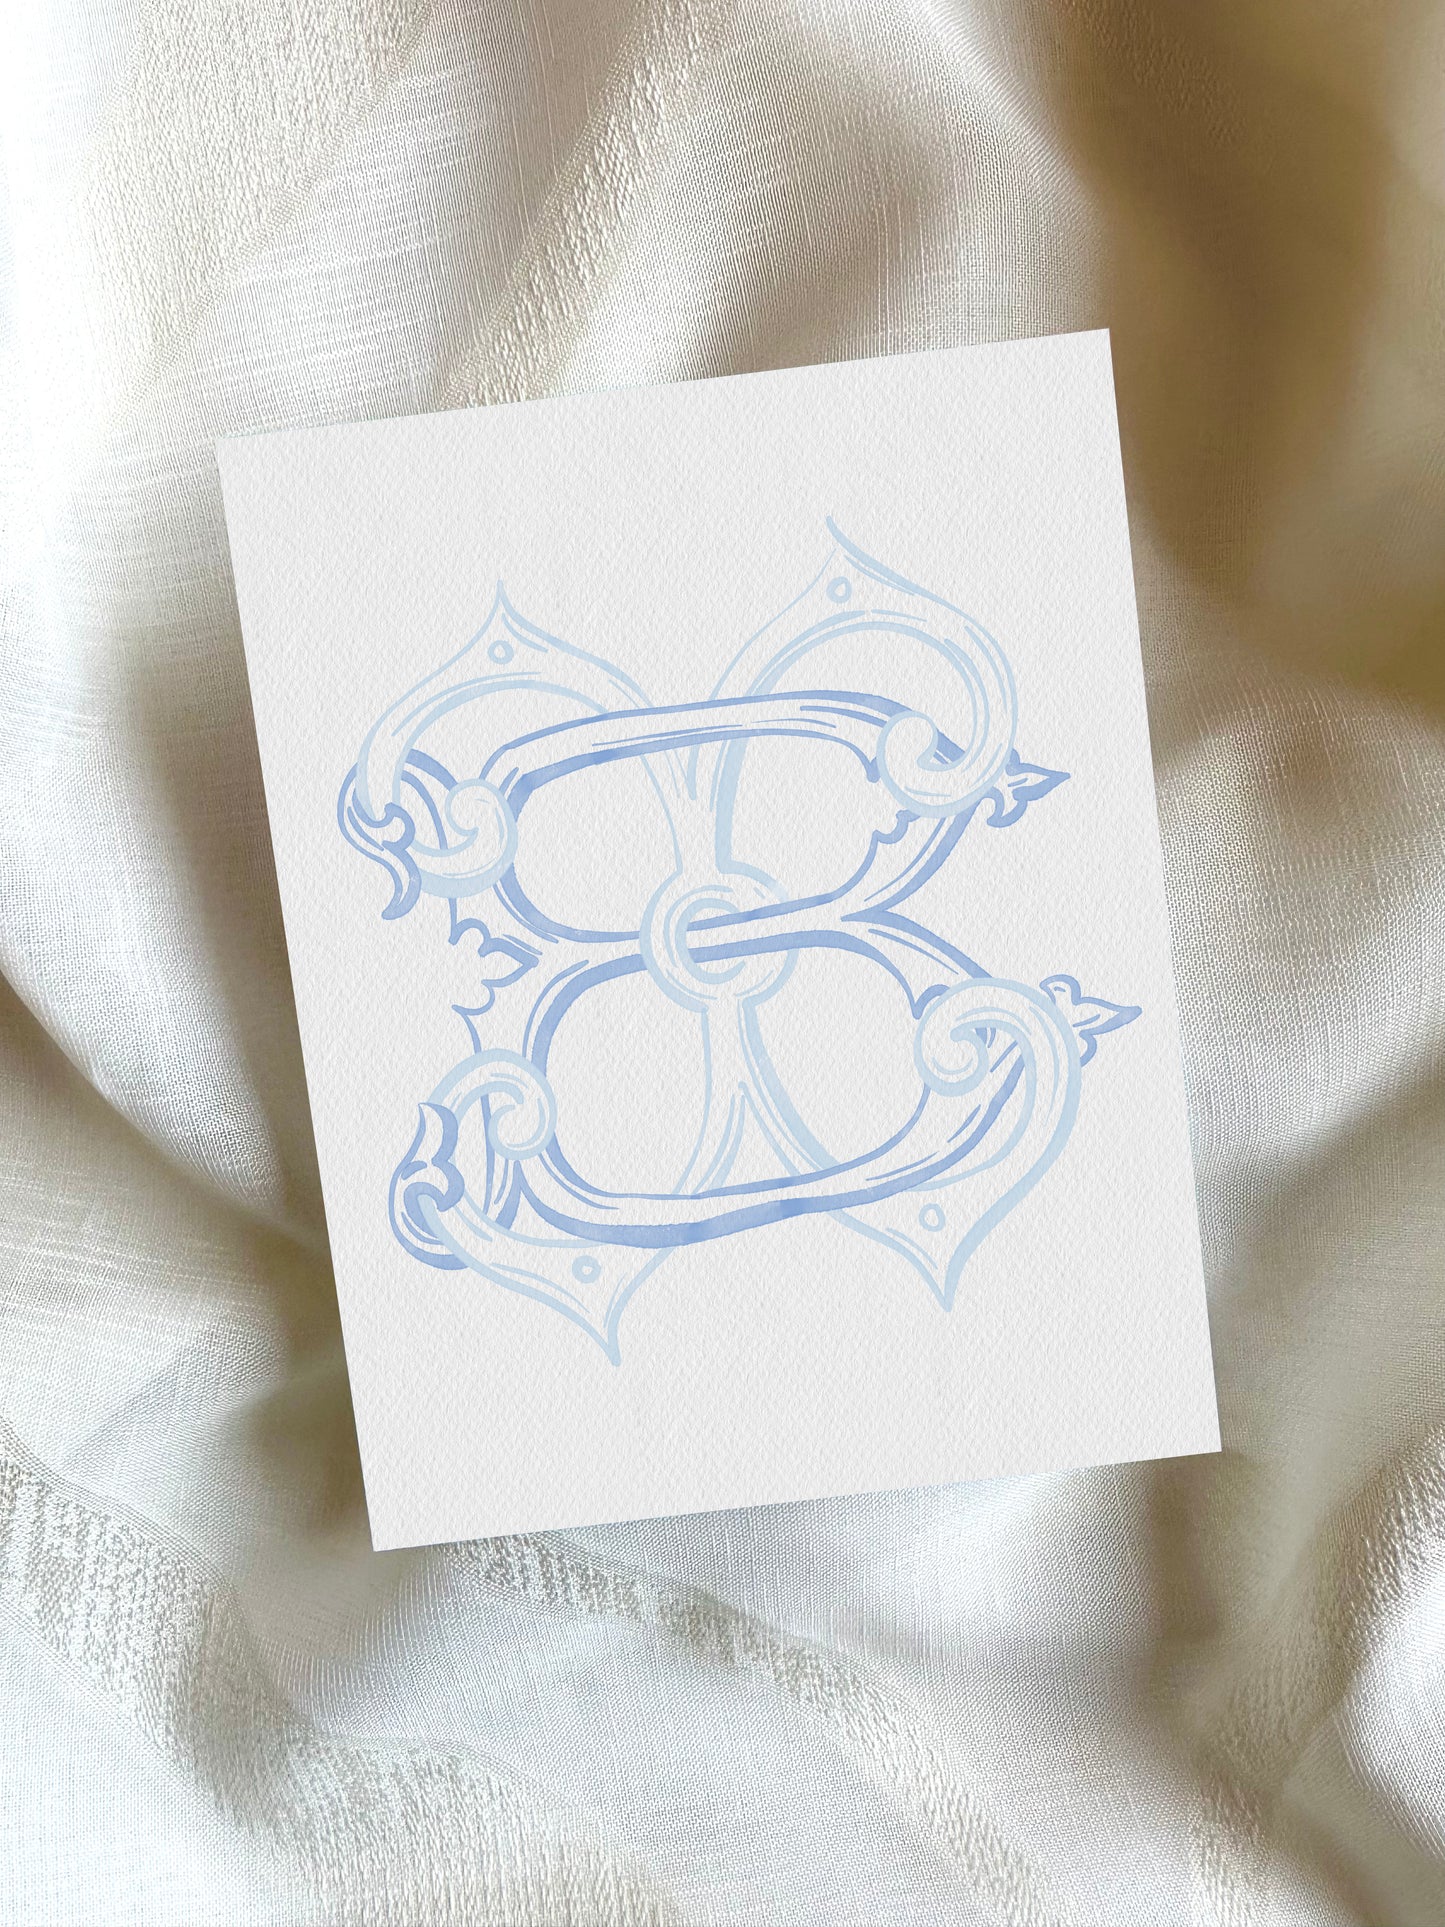 2 Letter Monogram with Letters BX XB | Digital Download - Wedding Monogram SVG, Personal Logo, Wedding Logo for Wedding Invitations